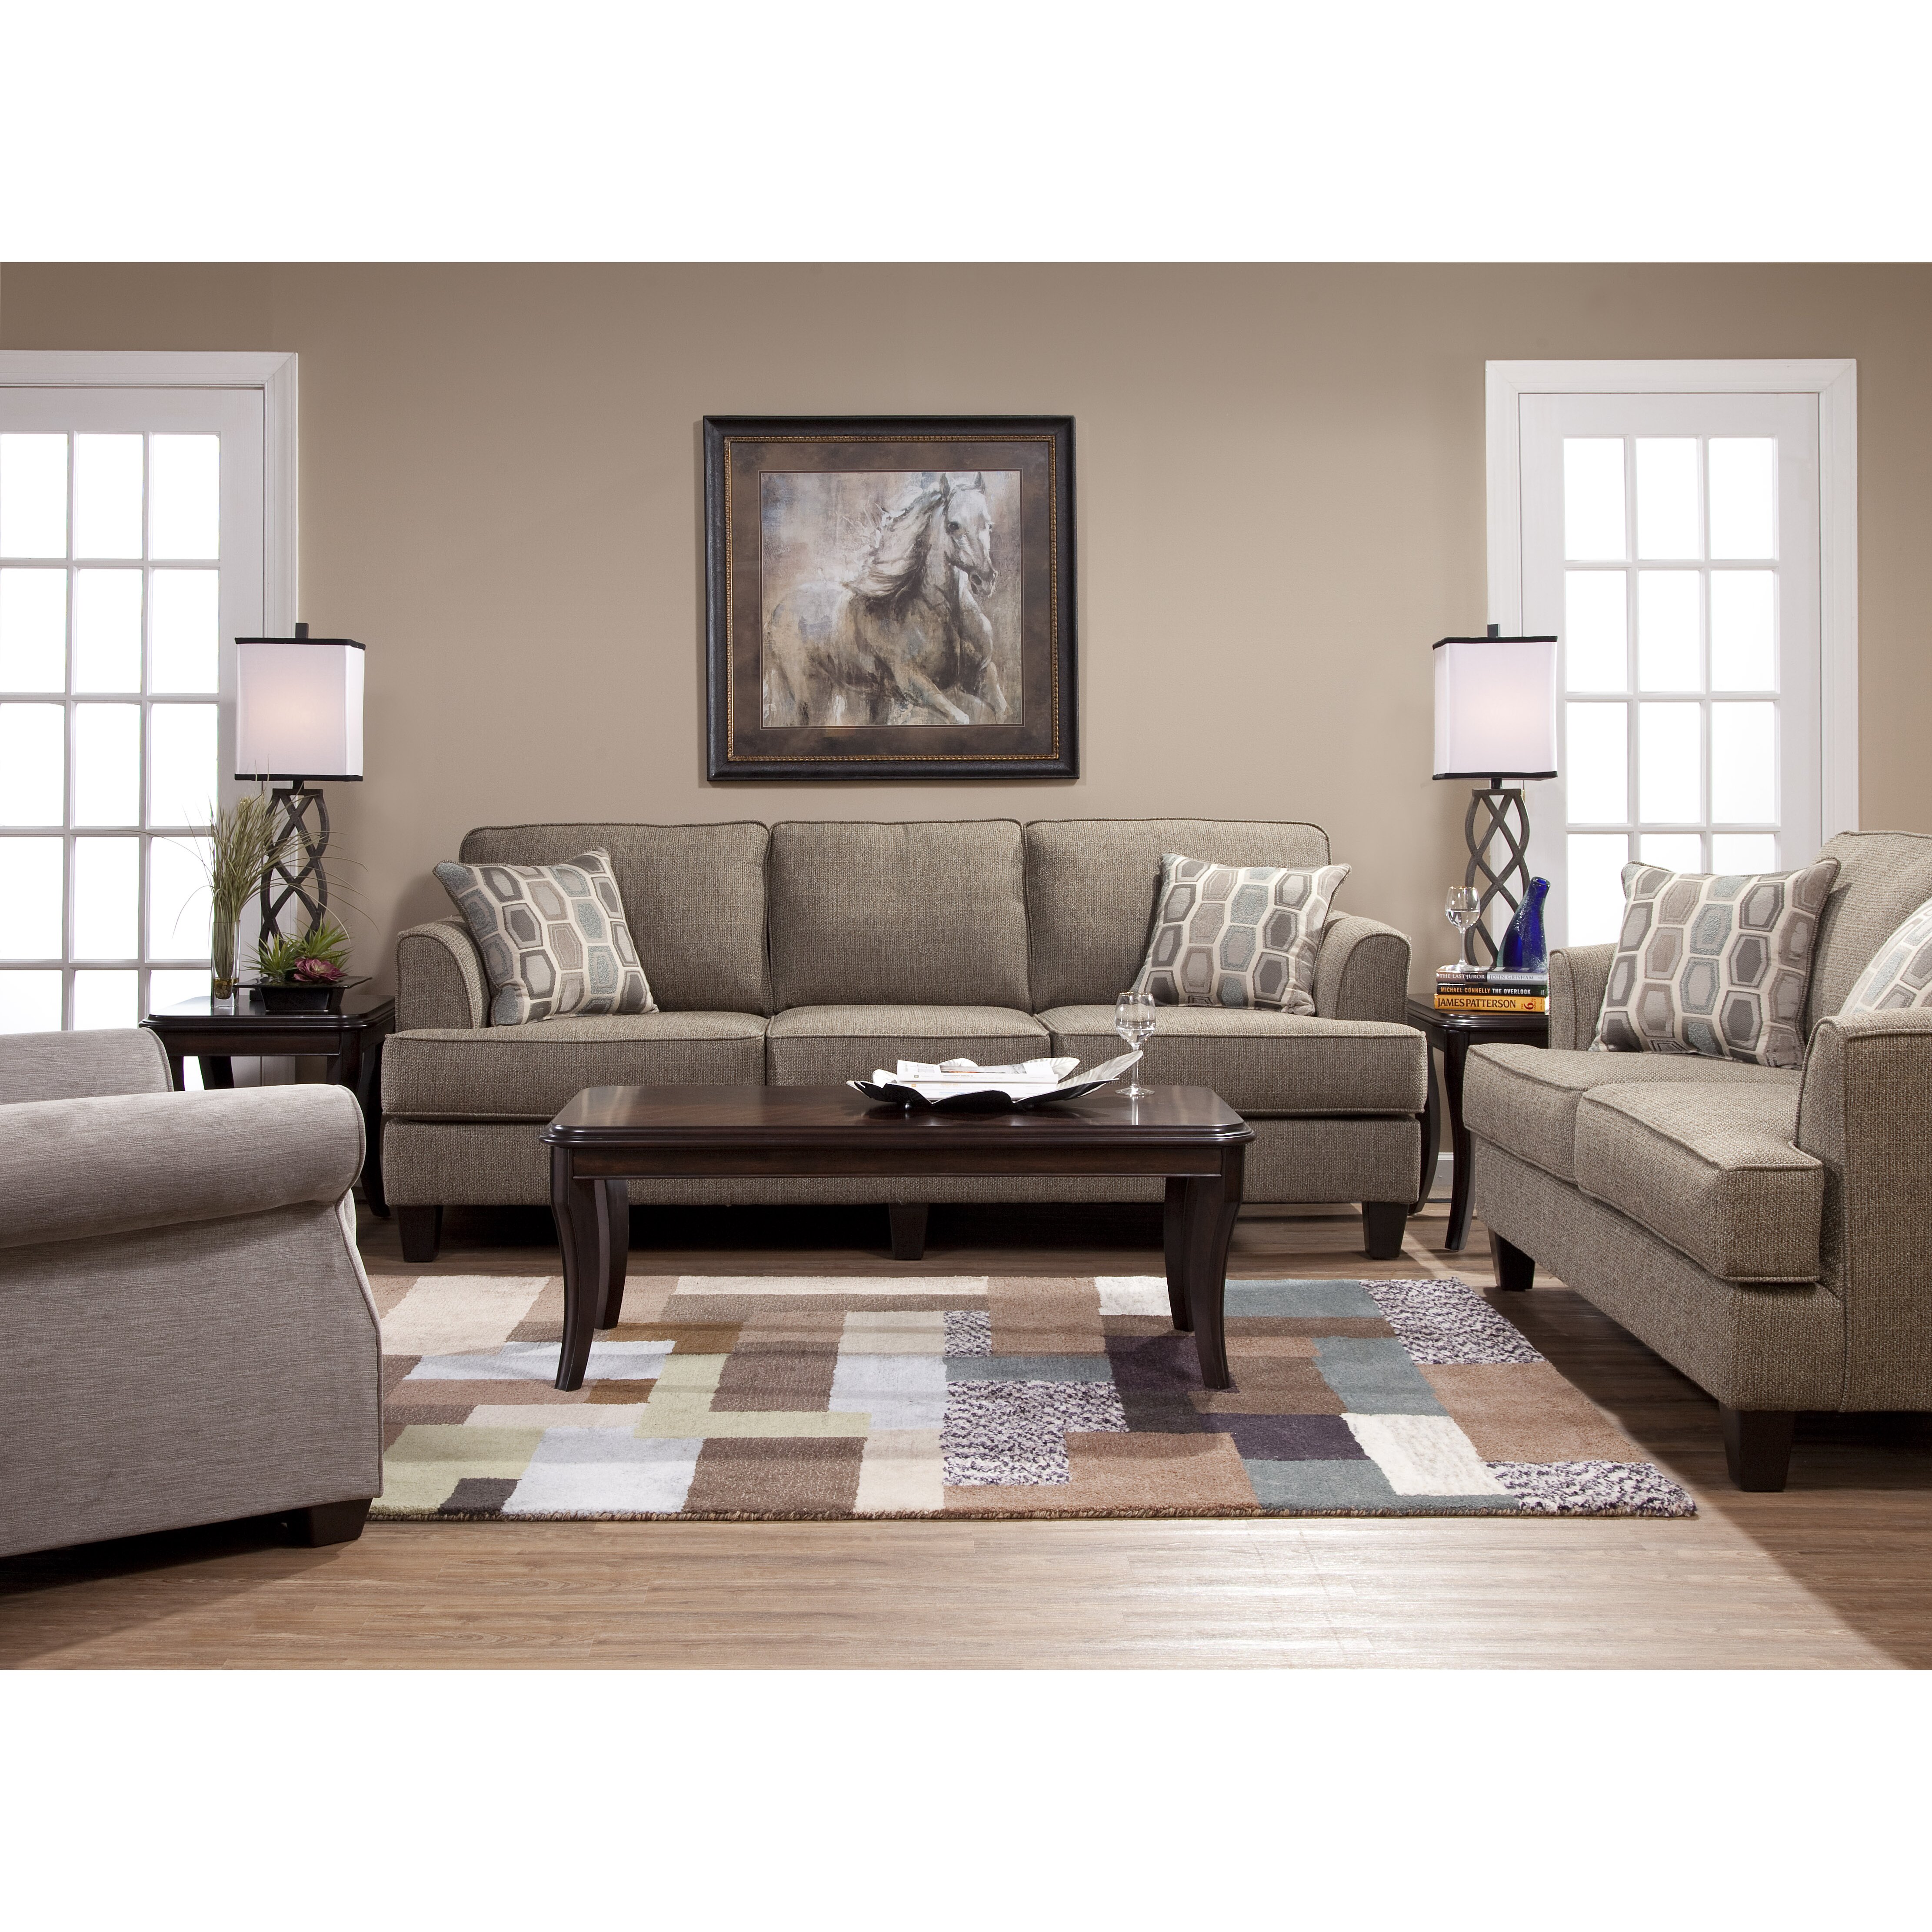  Serta Living Room Furniture for Simple Design